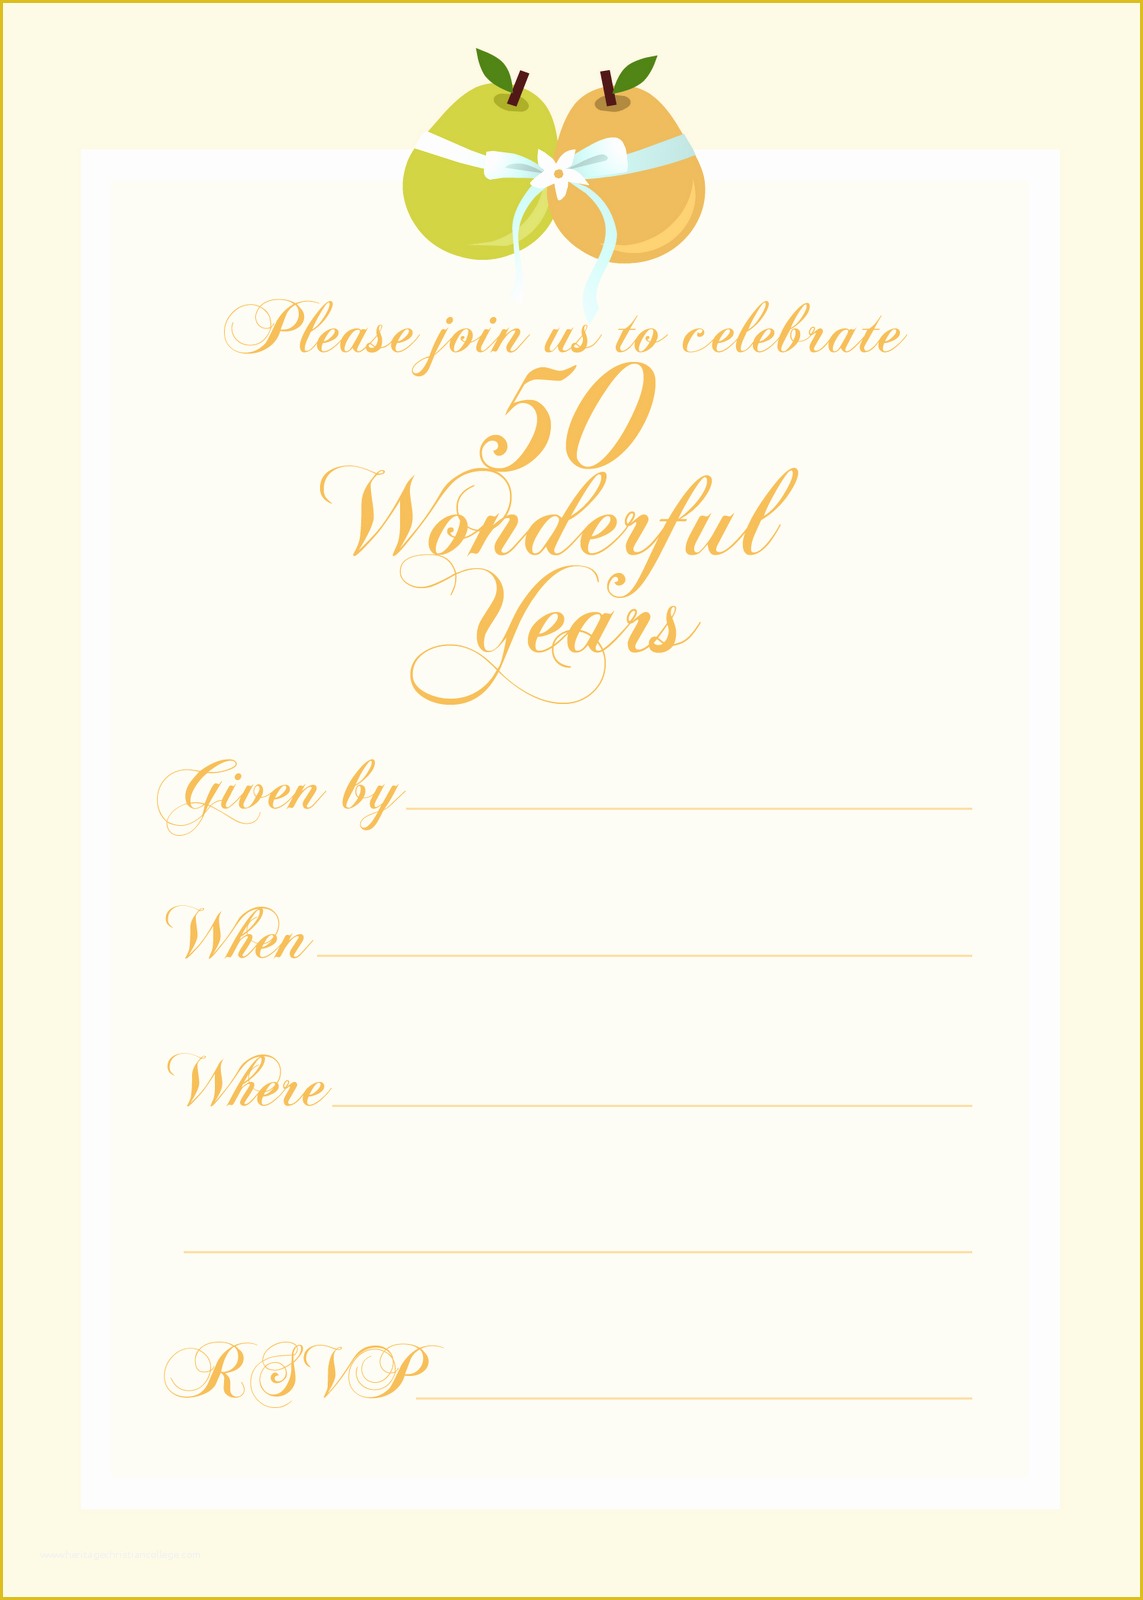 50th Wedding Anniversary Invitations Free Templates Of Free Printable Party Invitations Free 50th Wedding